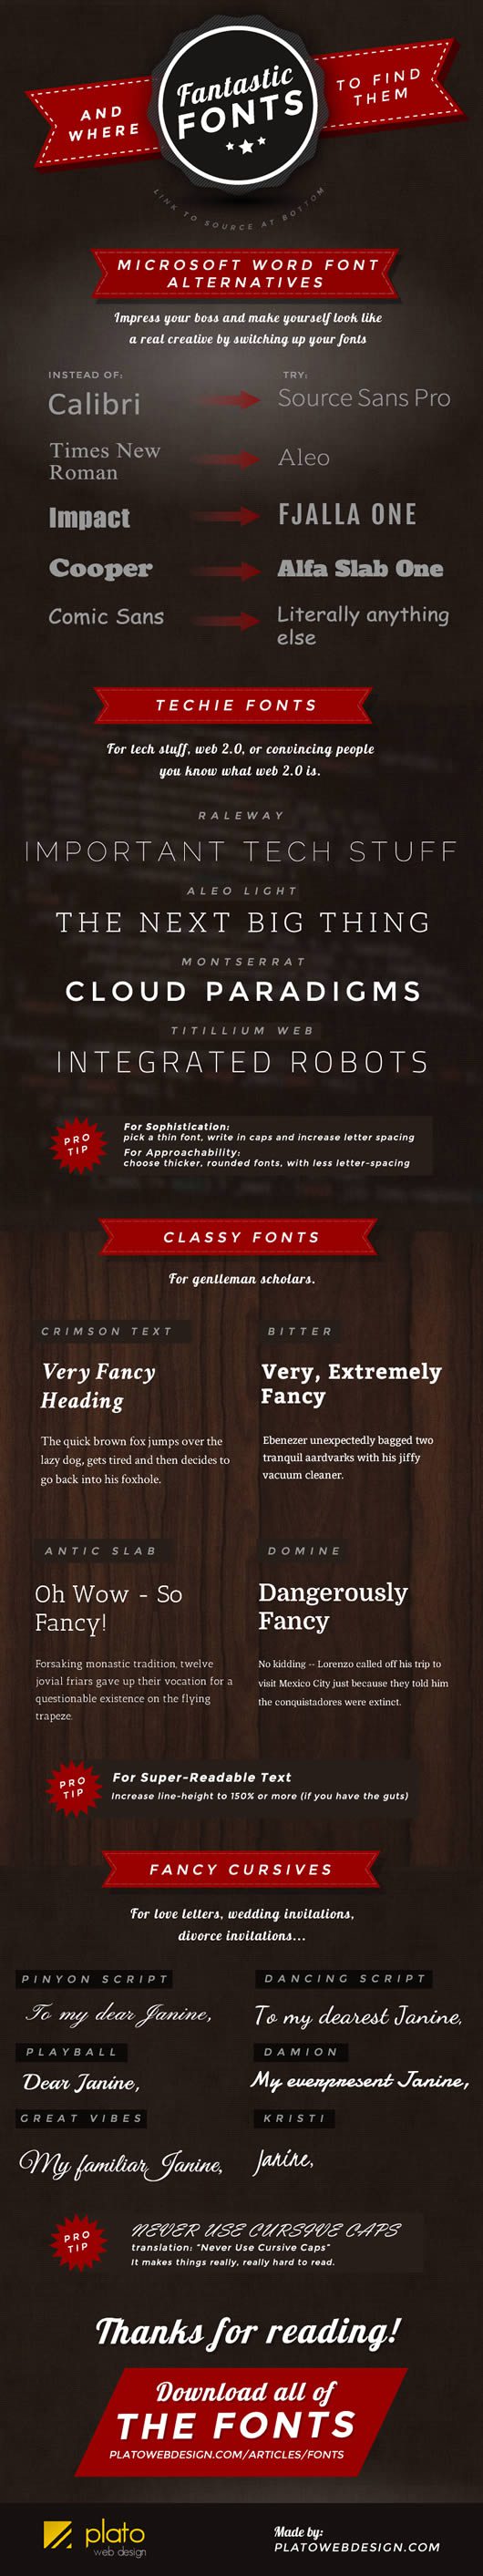 fantastic-free-fonts-infographic.jpg